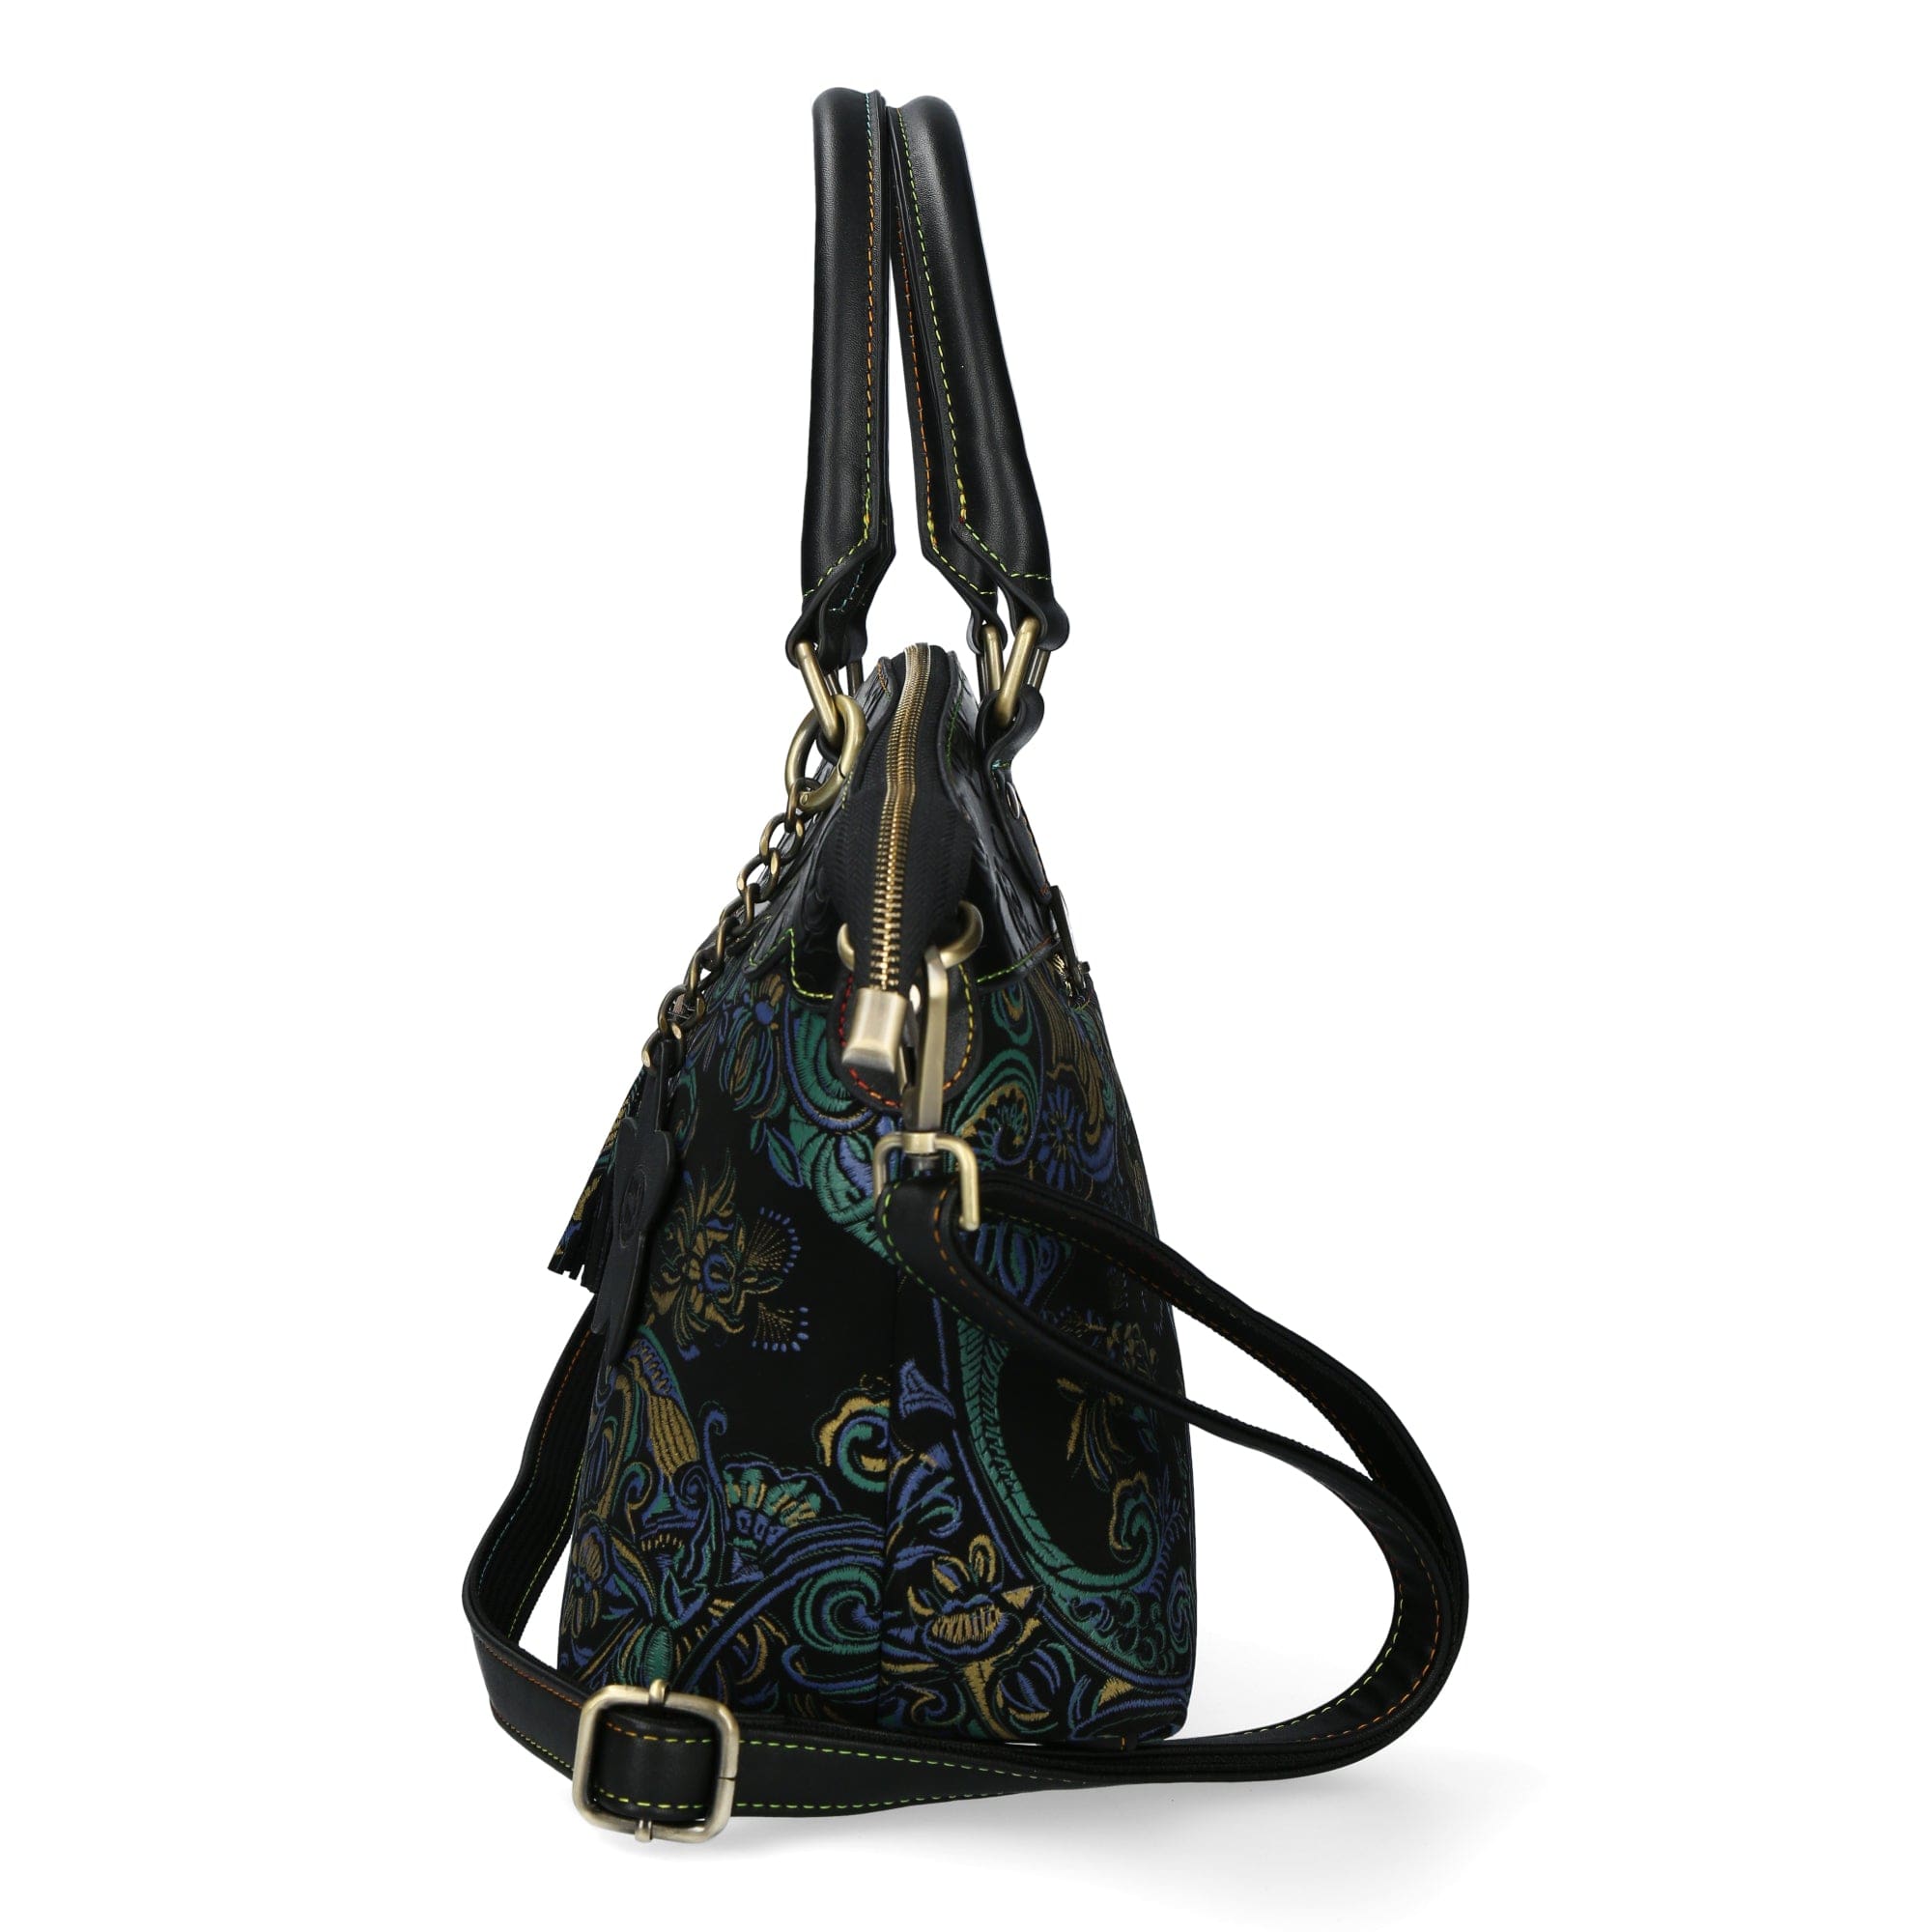 Leather Handbag 4736D - Bag